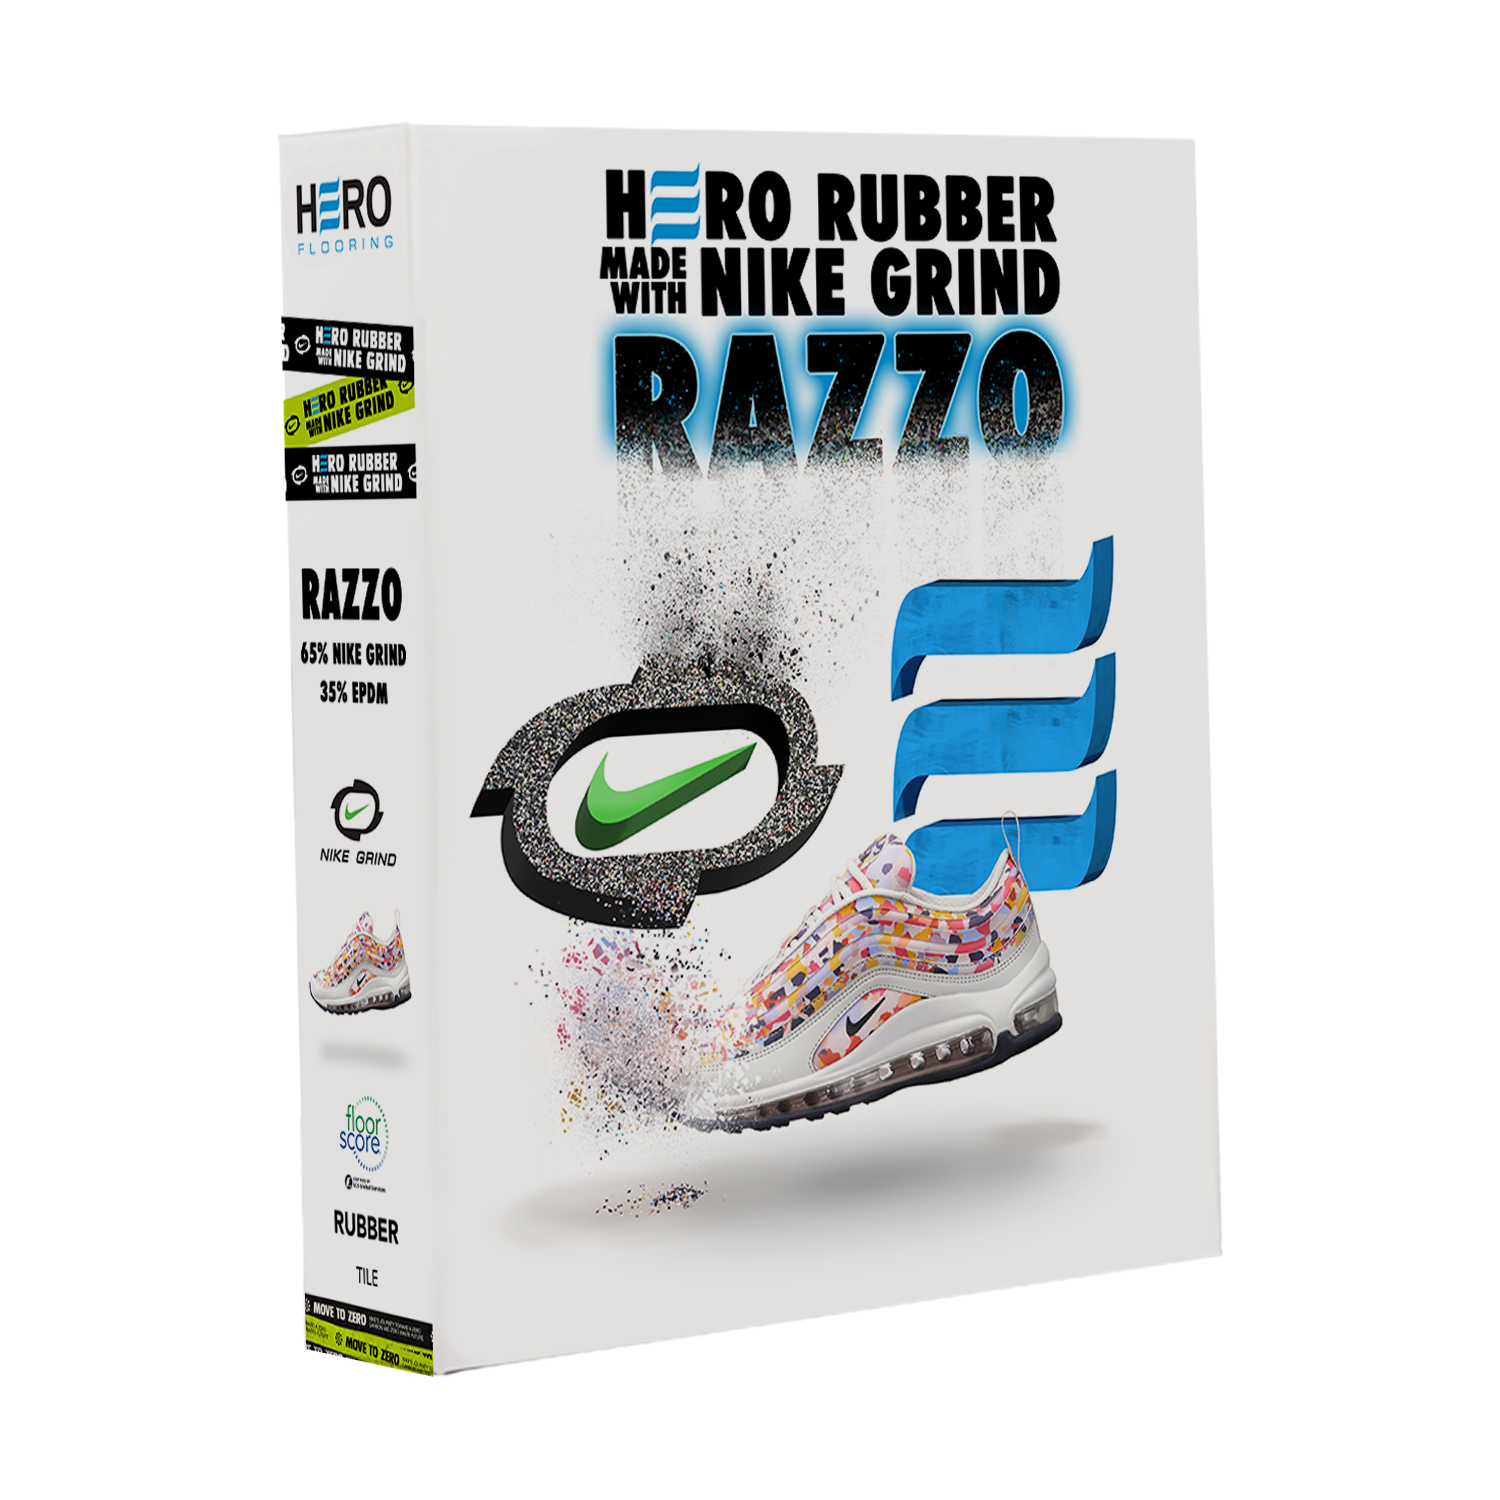 Hero Rubber made with Nike Grind-Razzo Architect Folder